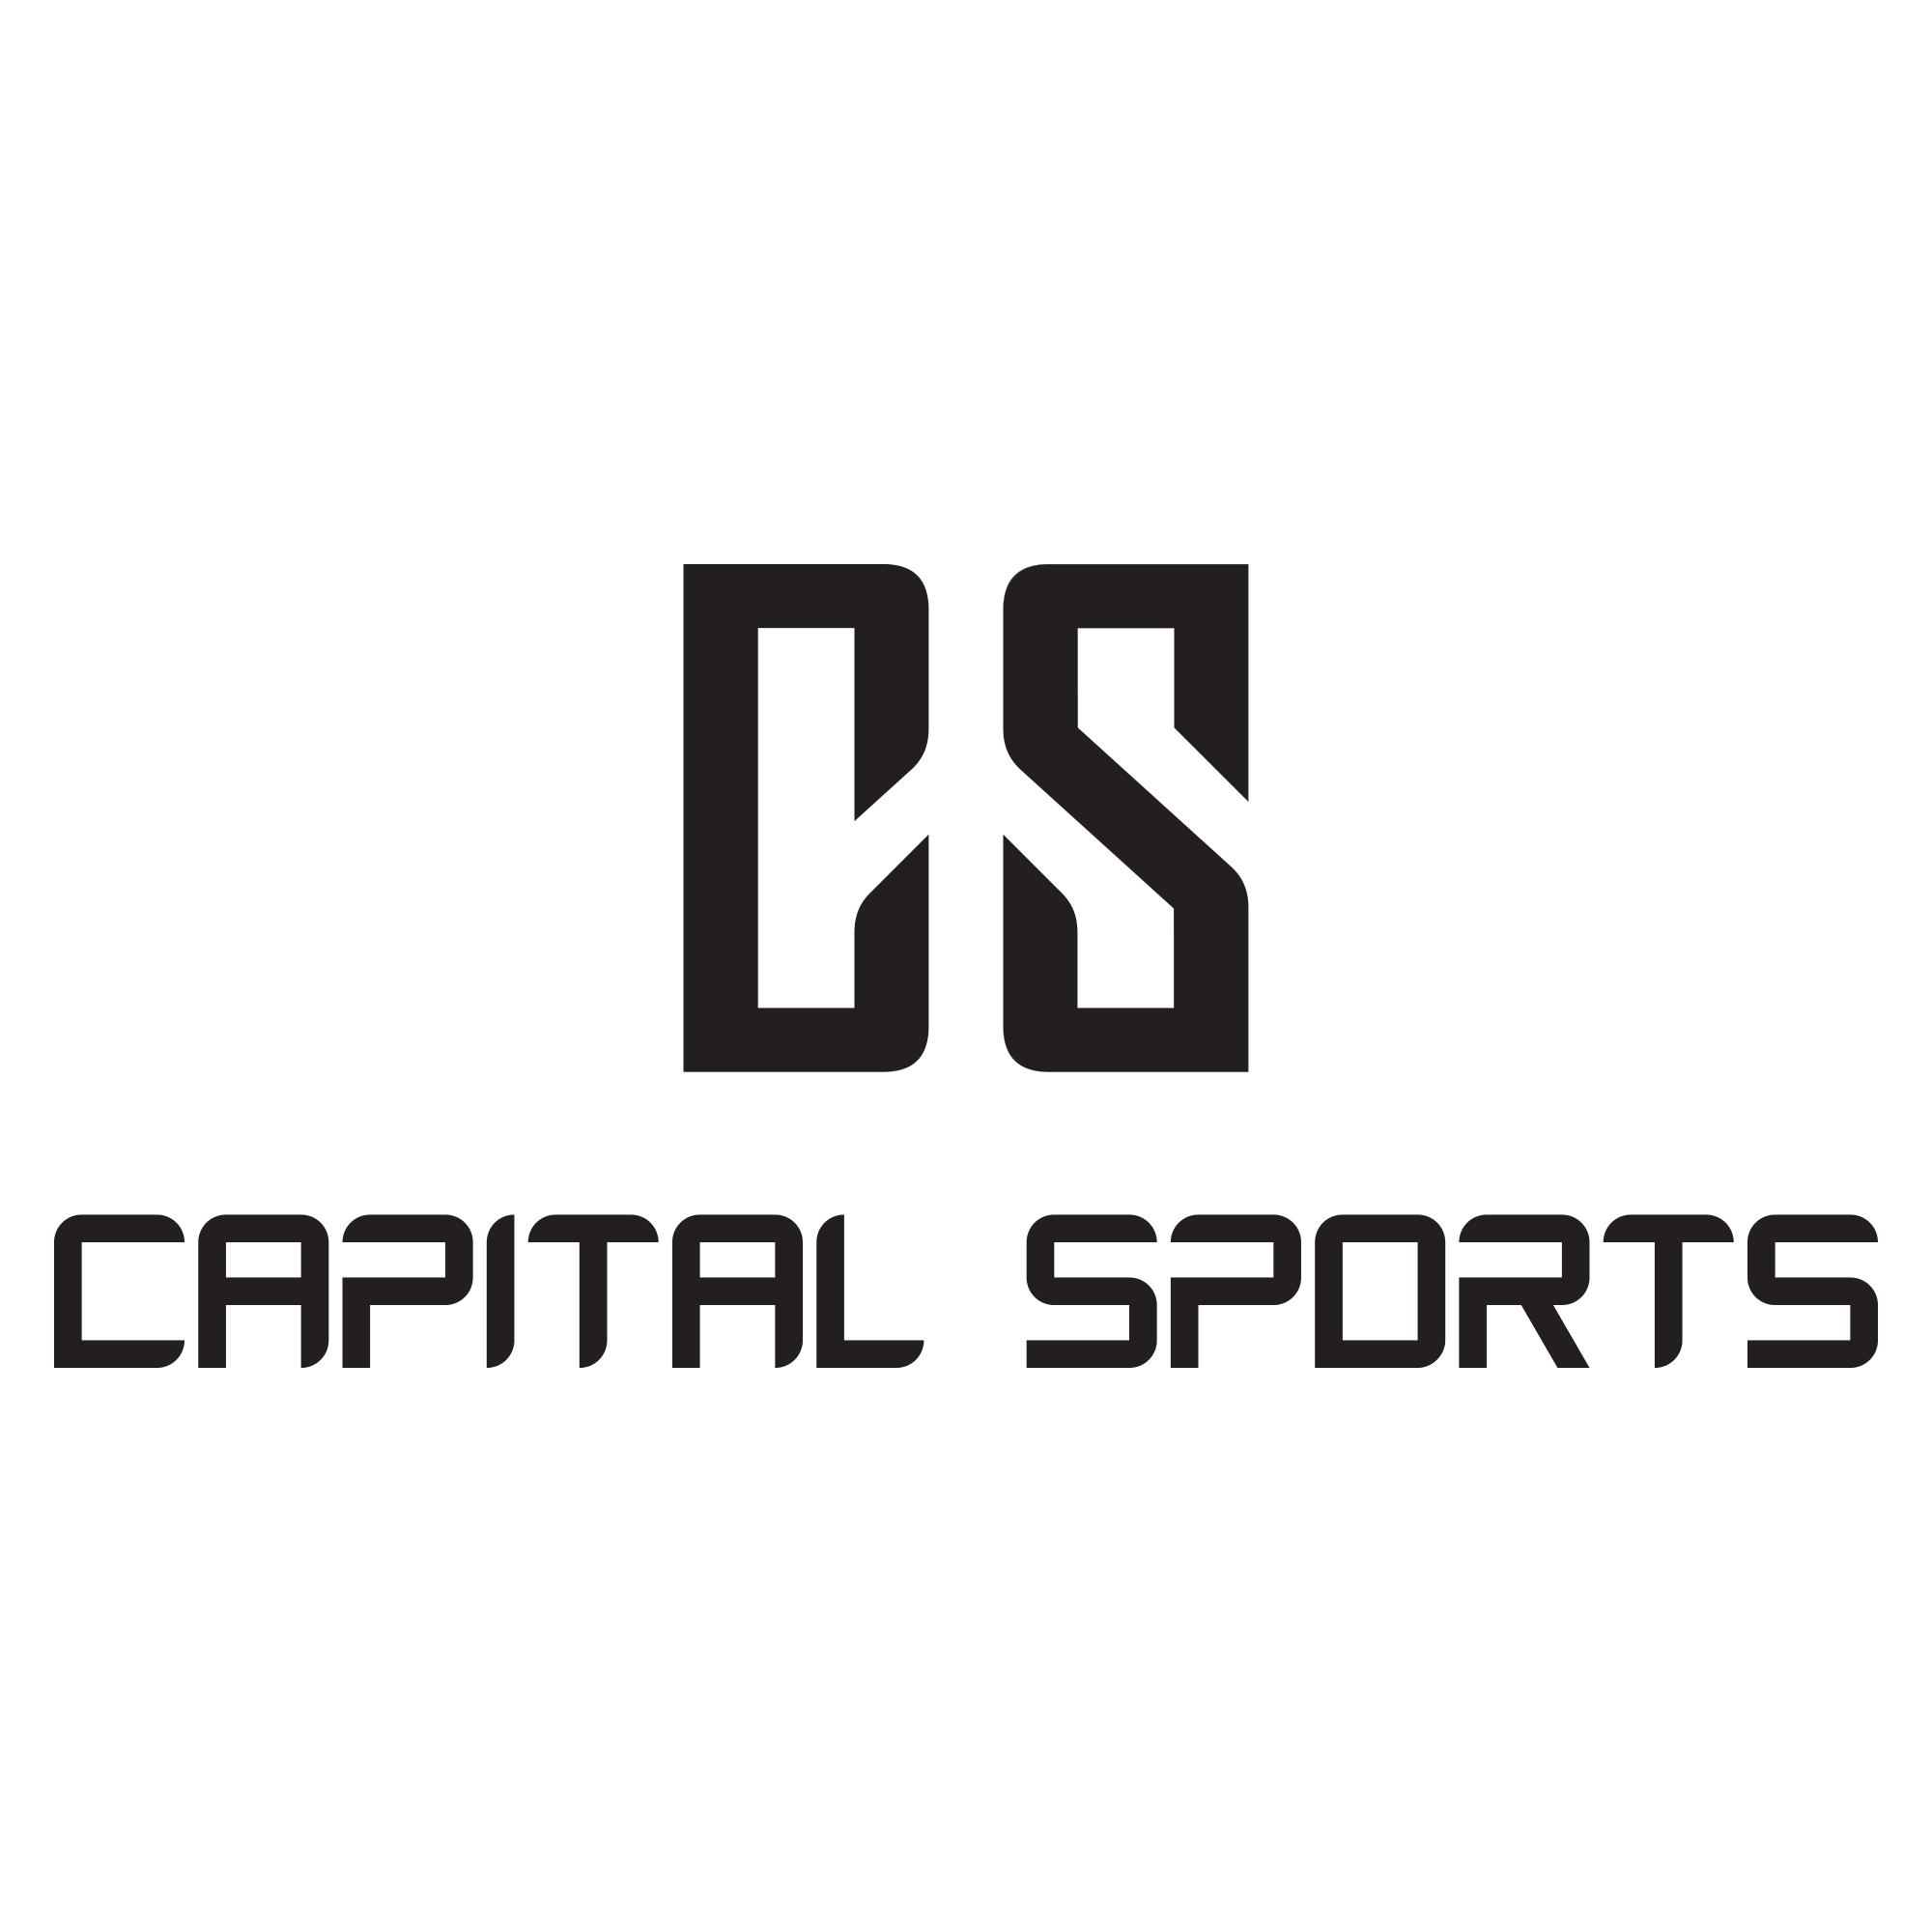 Capital Sports